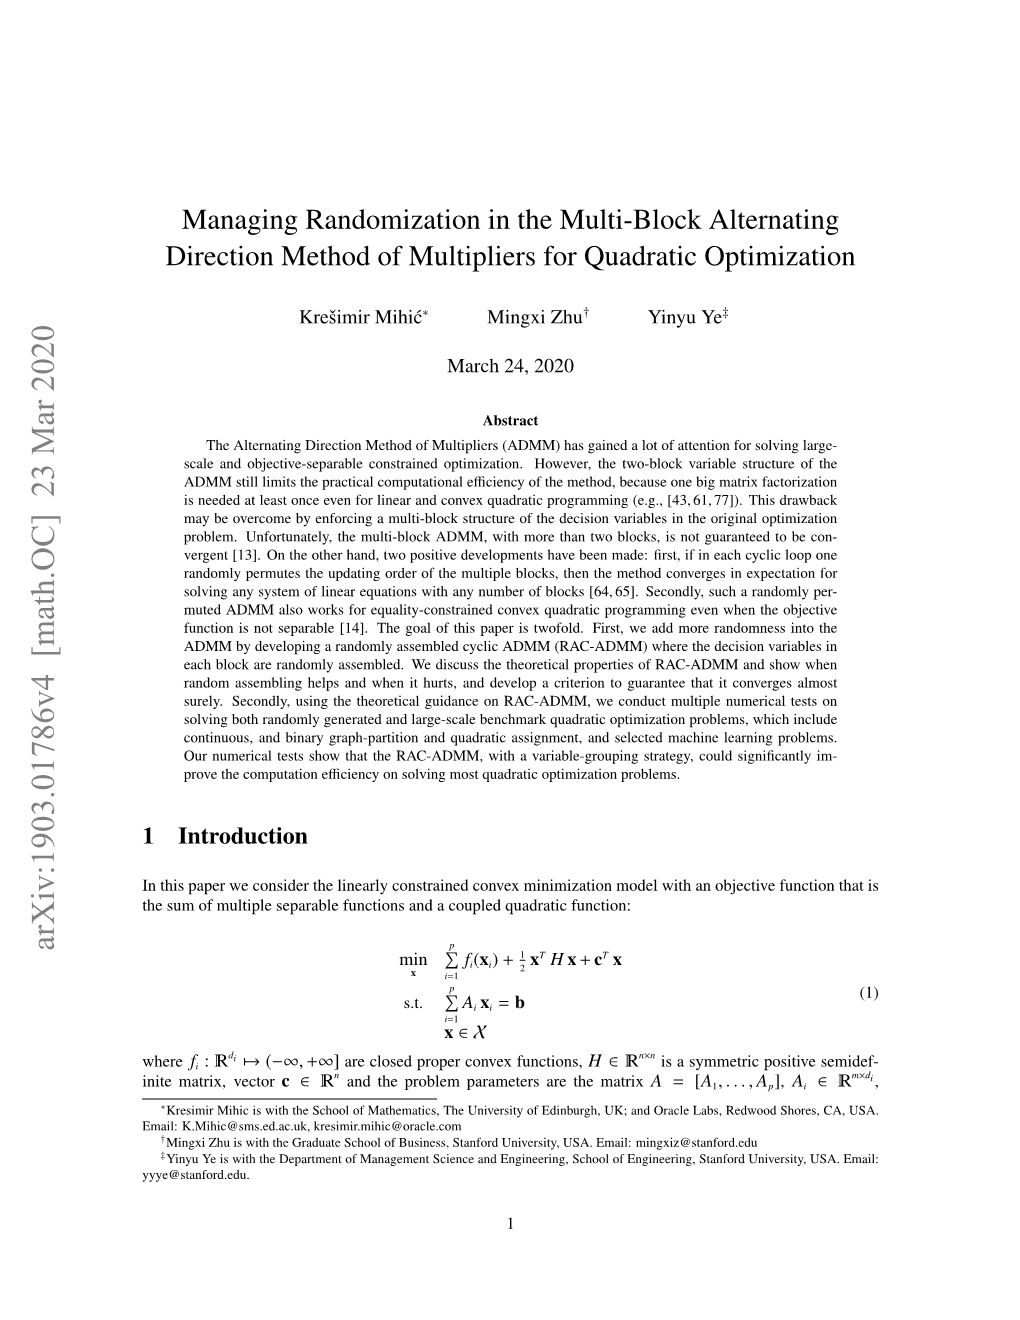 Managing Randomization in the Multi-Block Alternating Direction Method of Multipliers for Quadratic Optimization